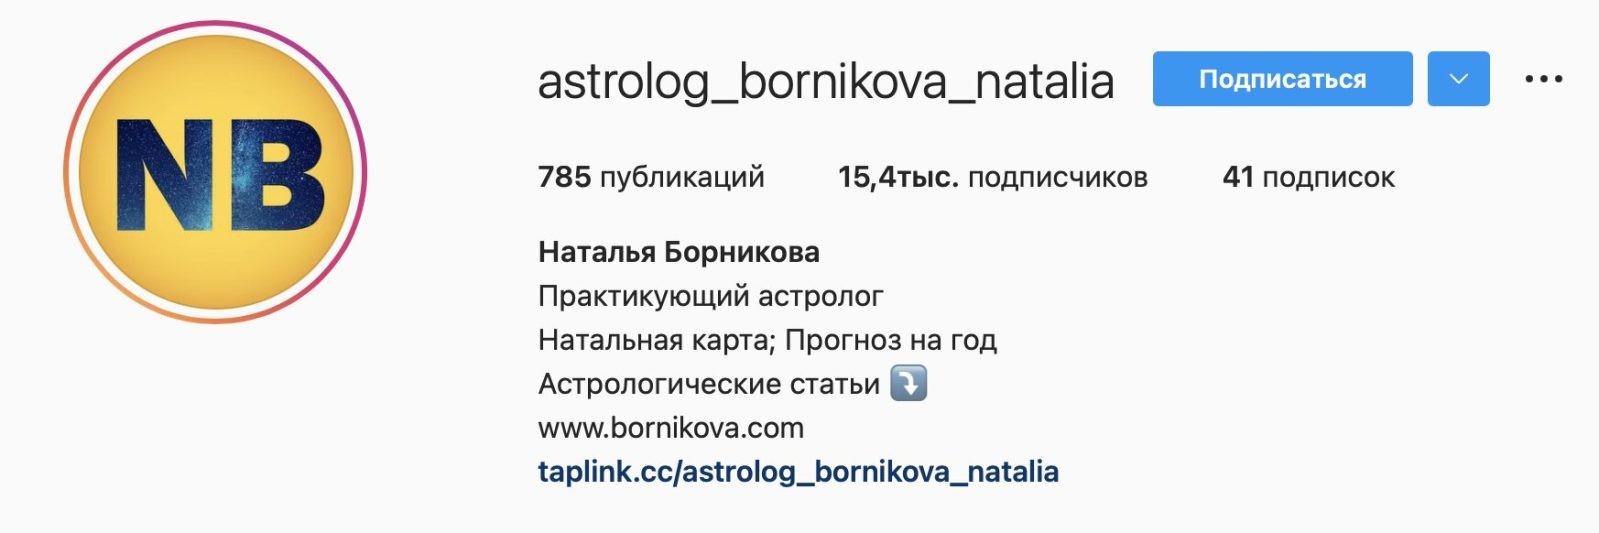 Астролог Наталья Бортникова инстаграм